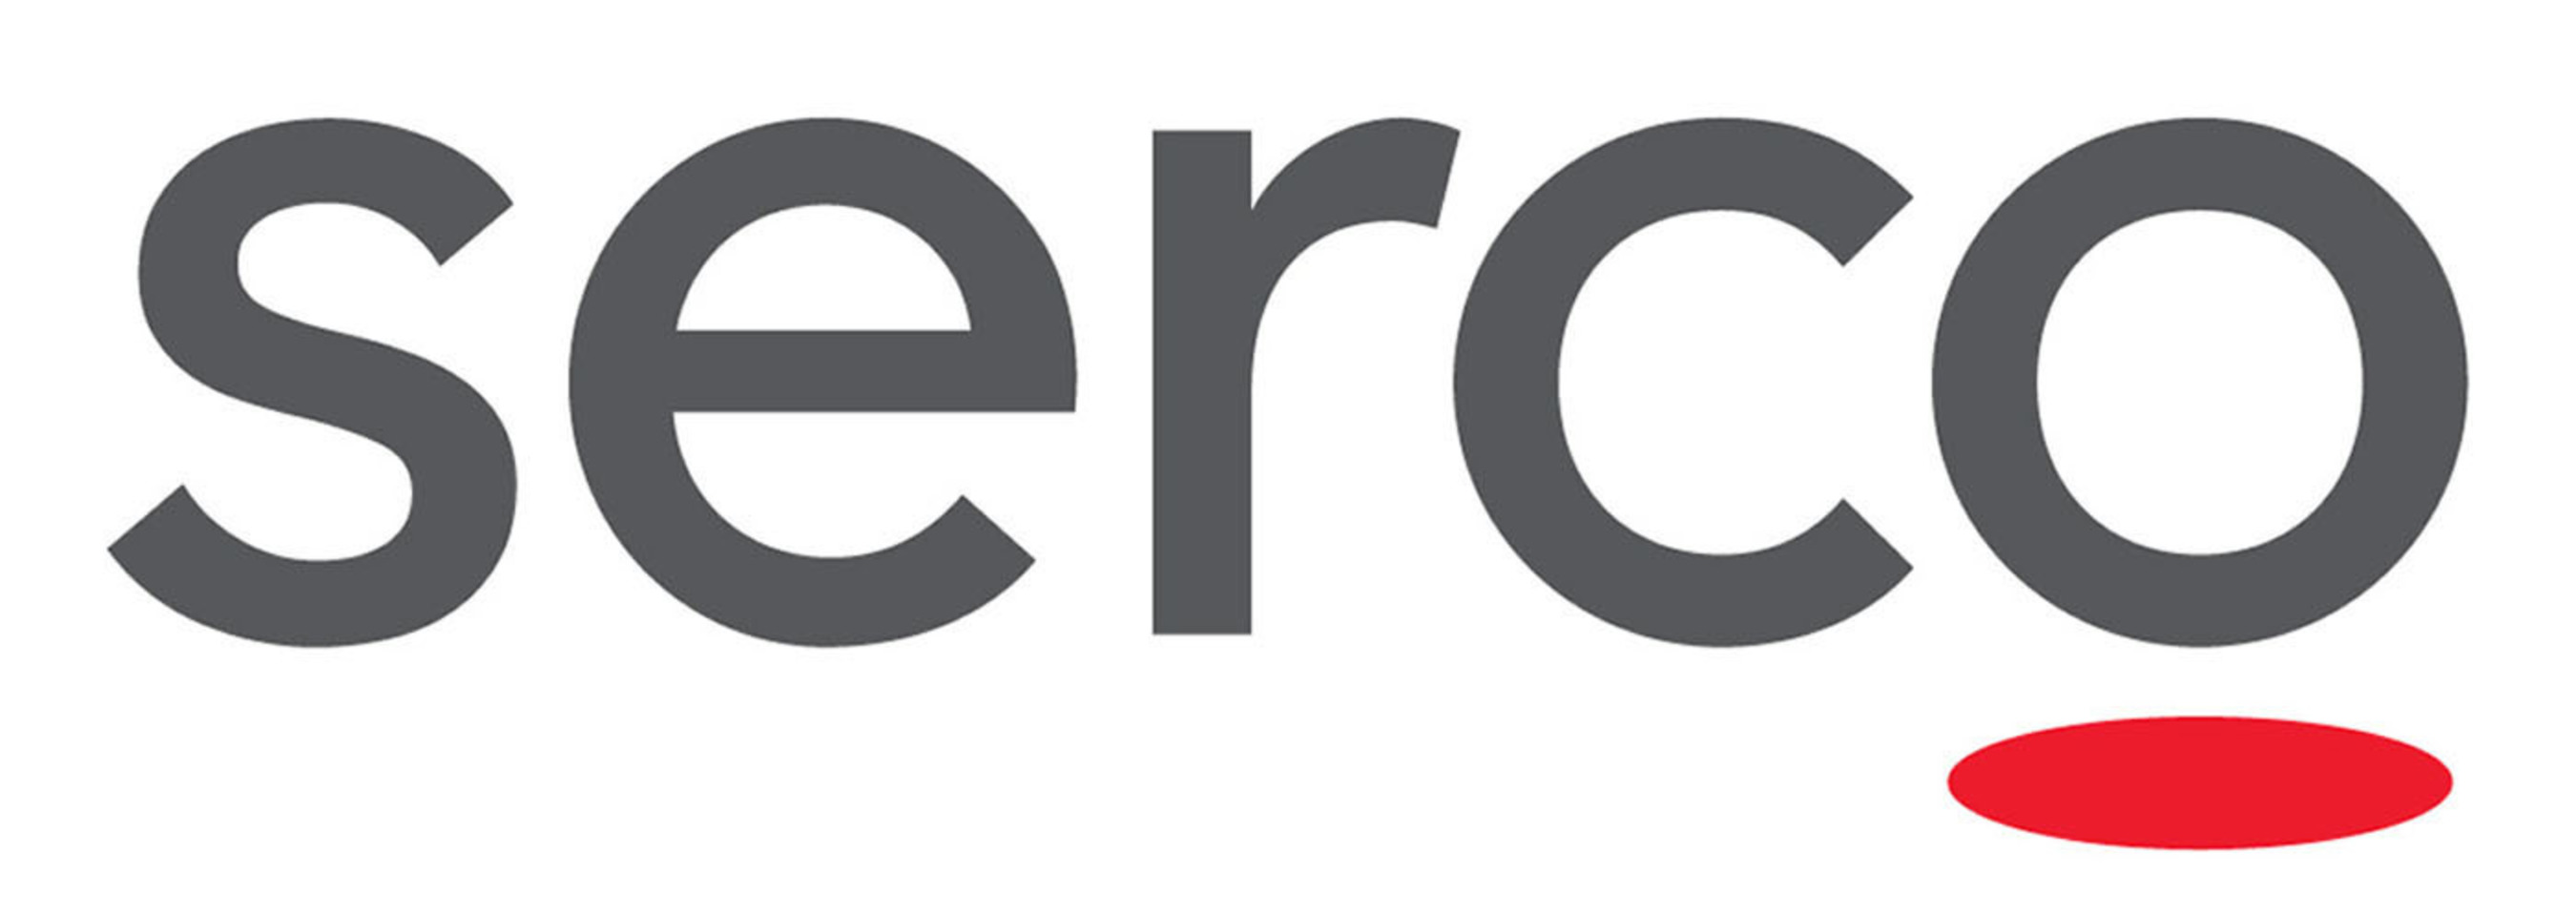 Serco Inc. logo